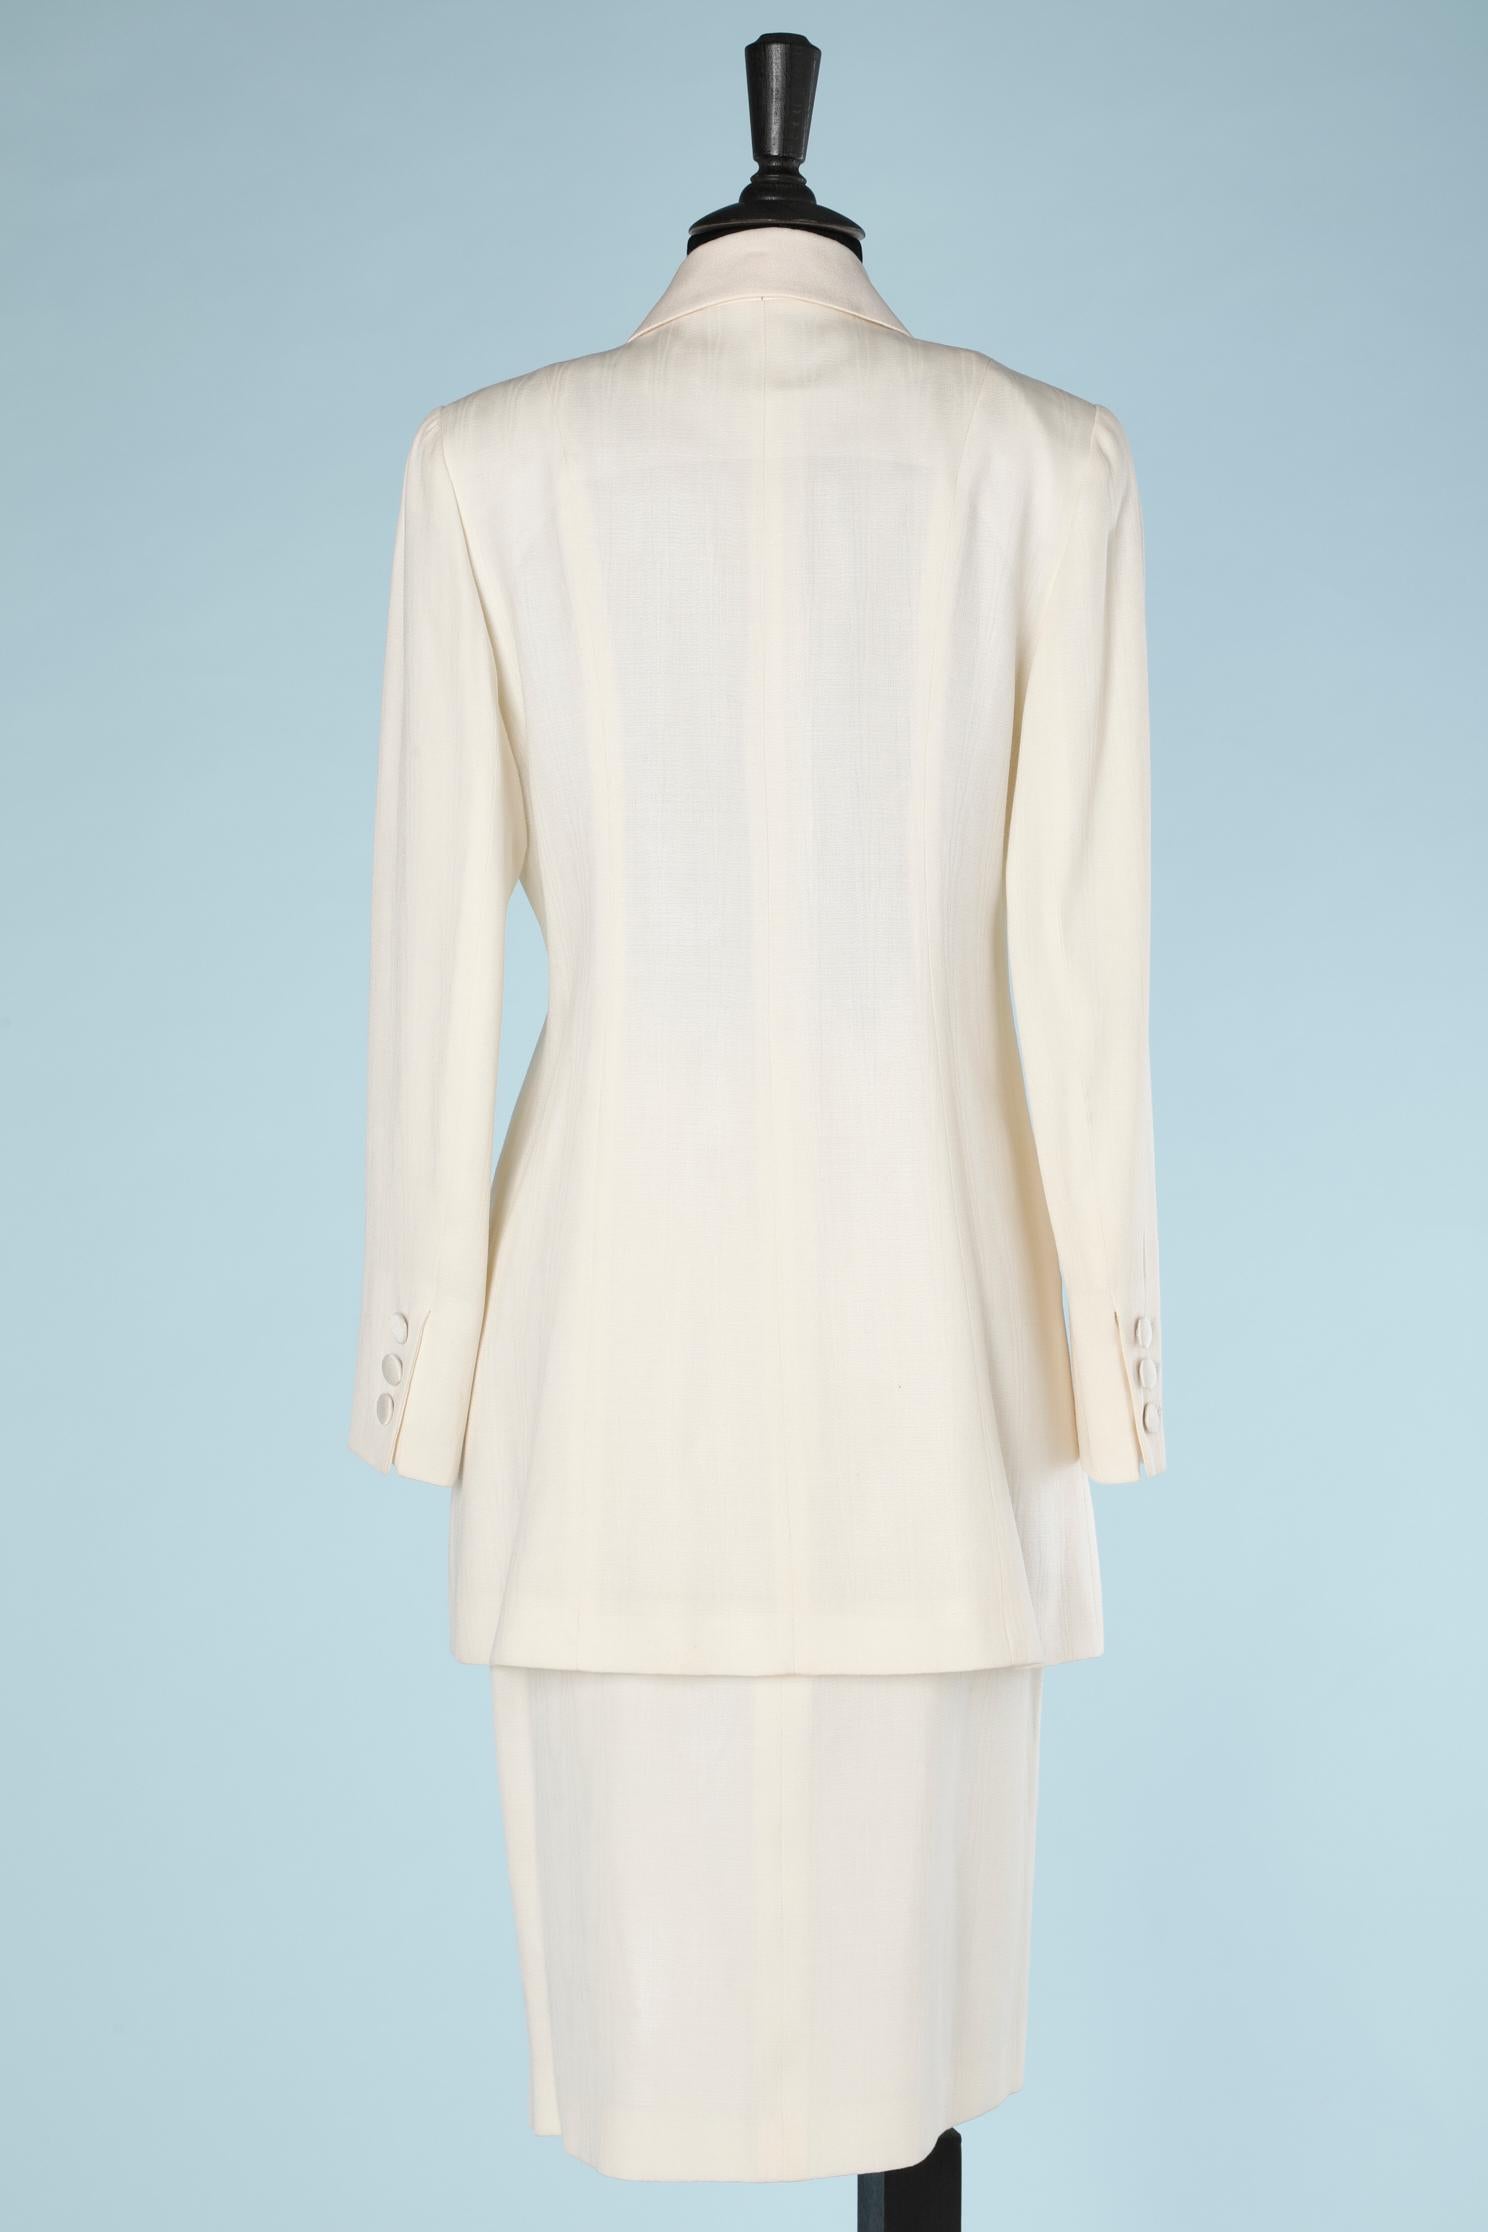 Women's Off-white thin wool skirt suit Chantal Thomass FW 1995/1996